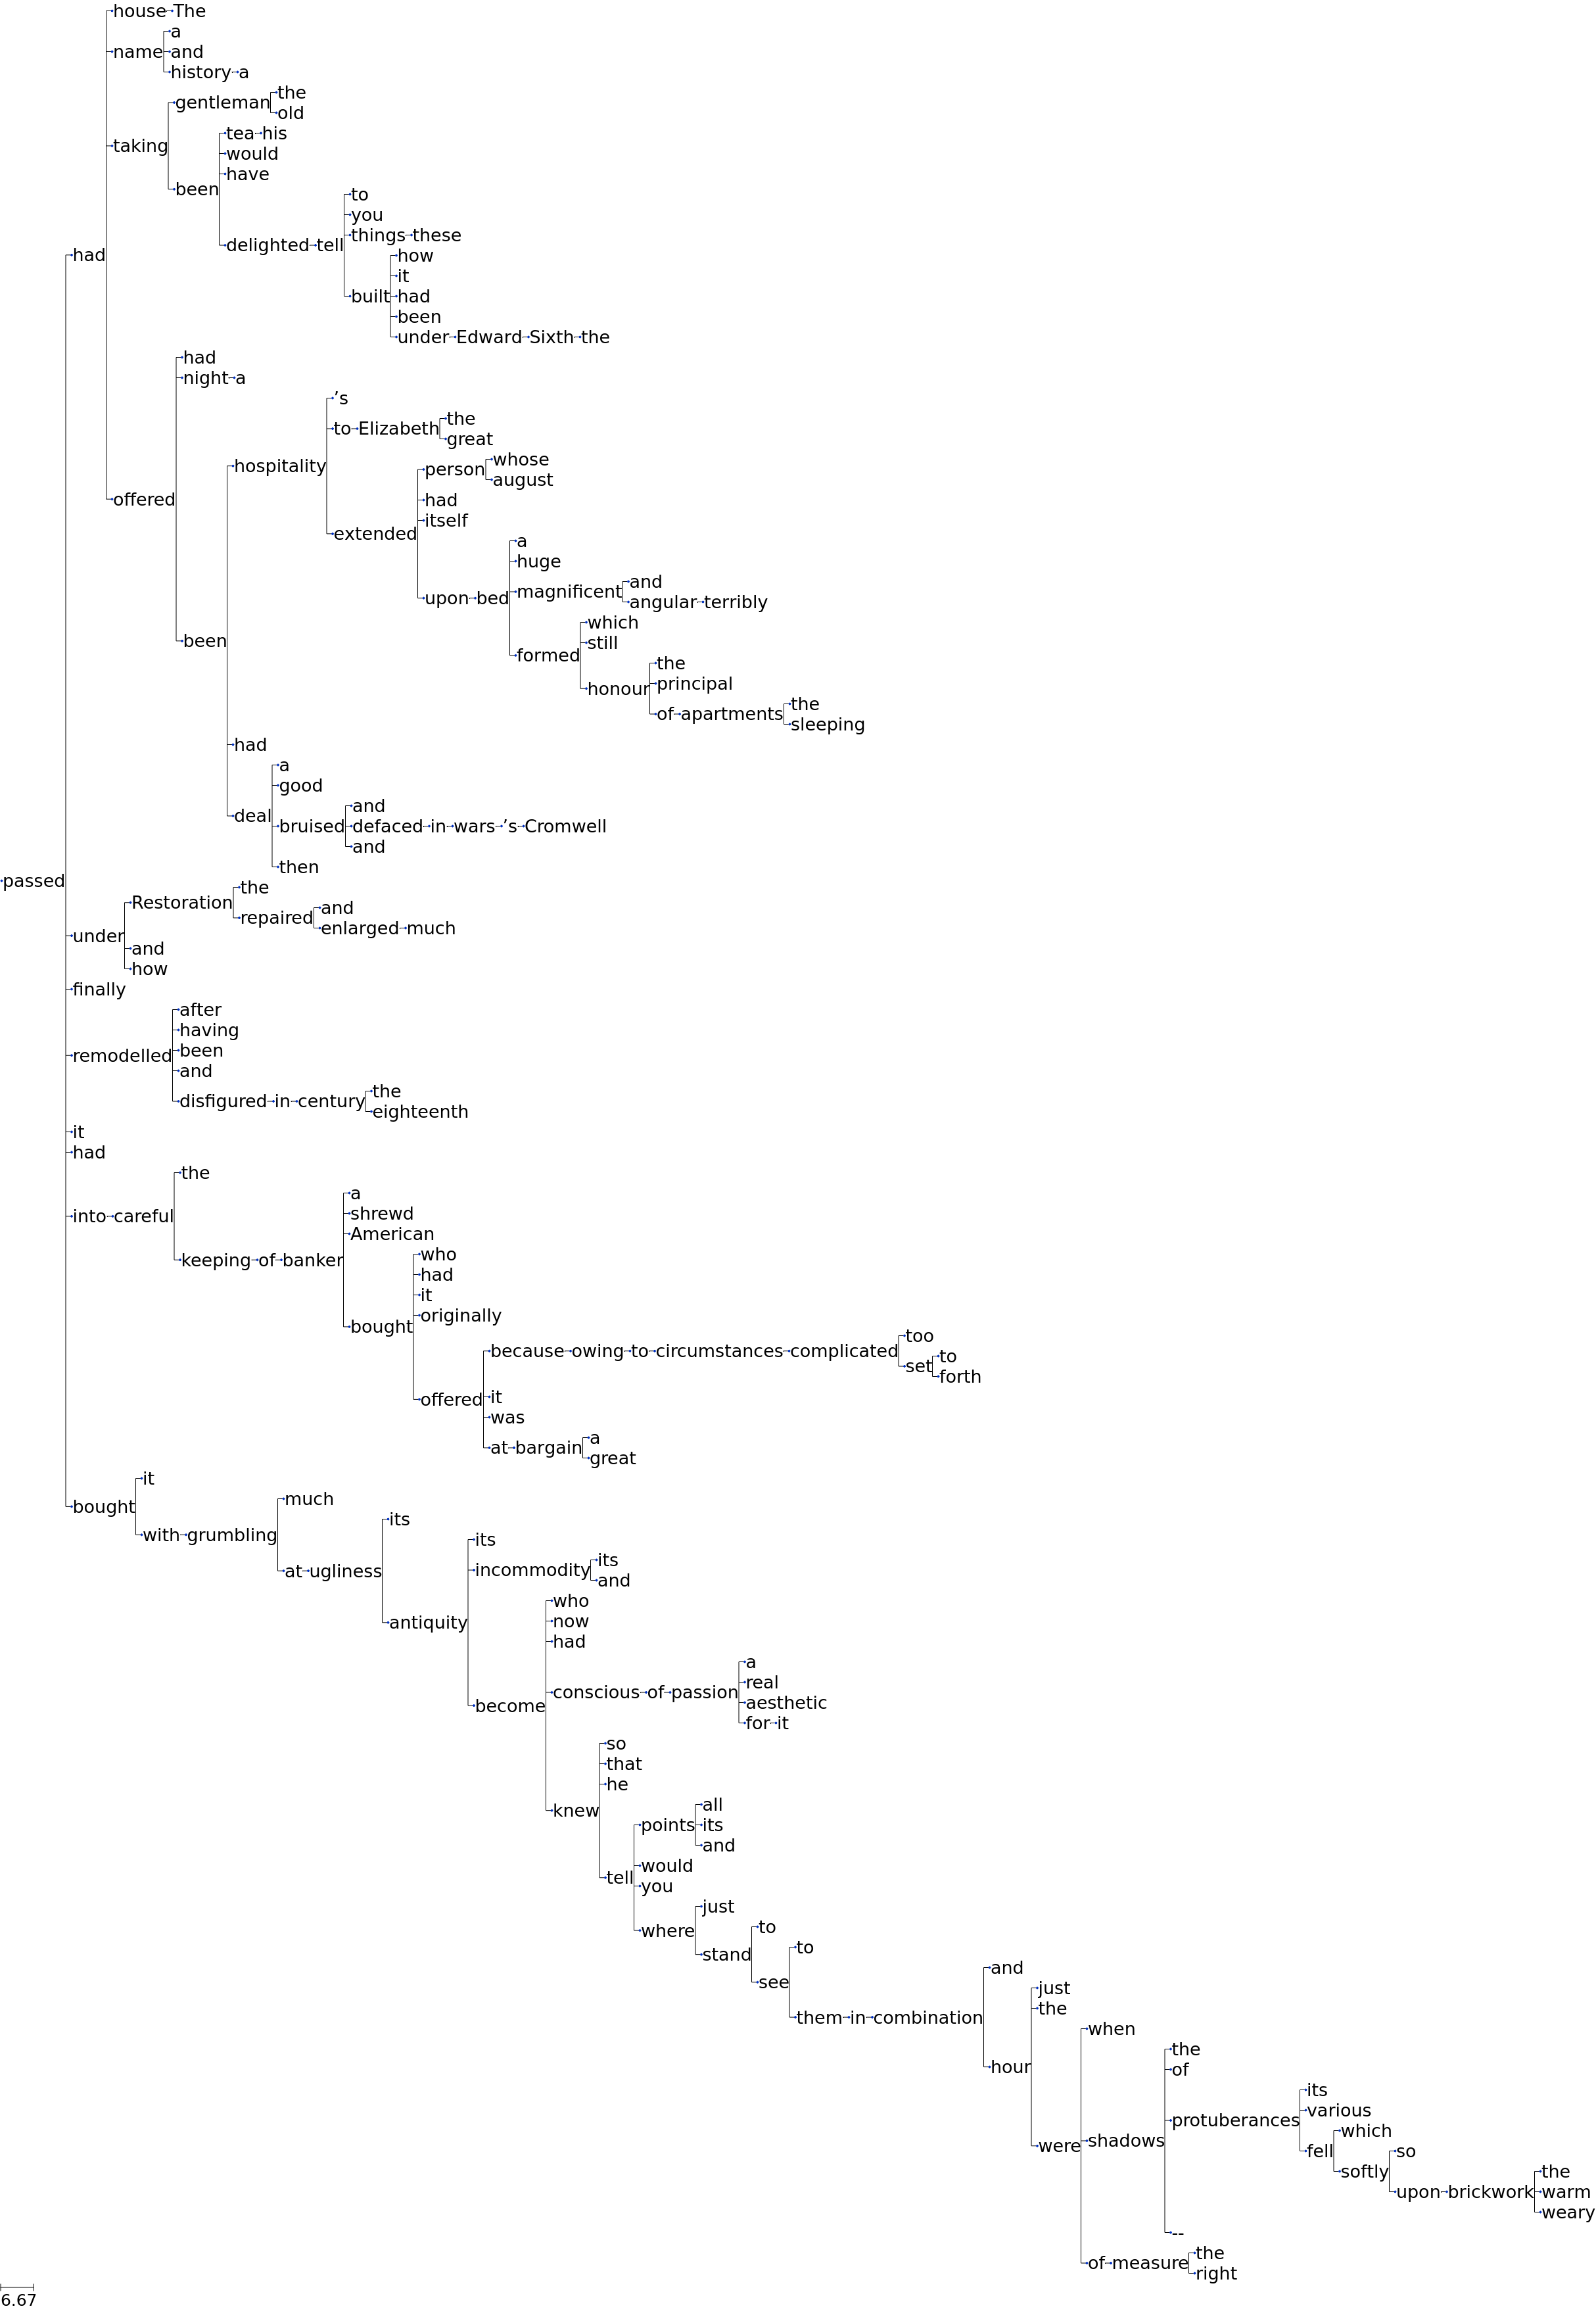 Figure 1: Visualization of the dependency-parsed tree of James’s longest sentence